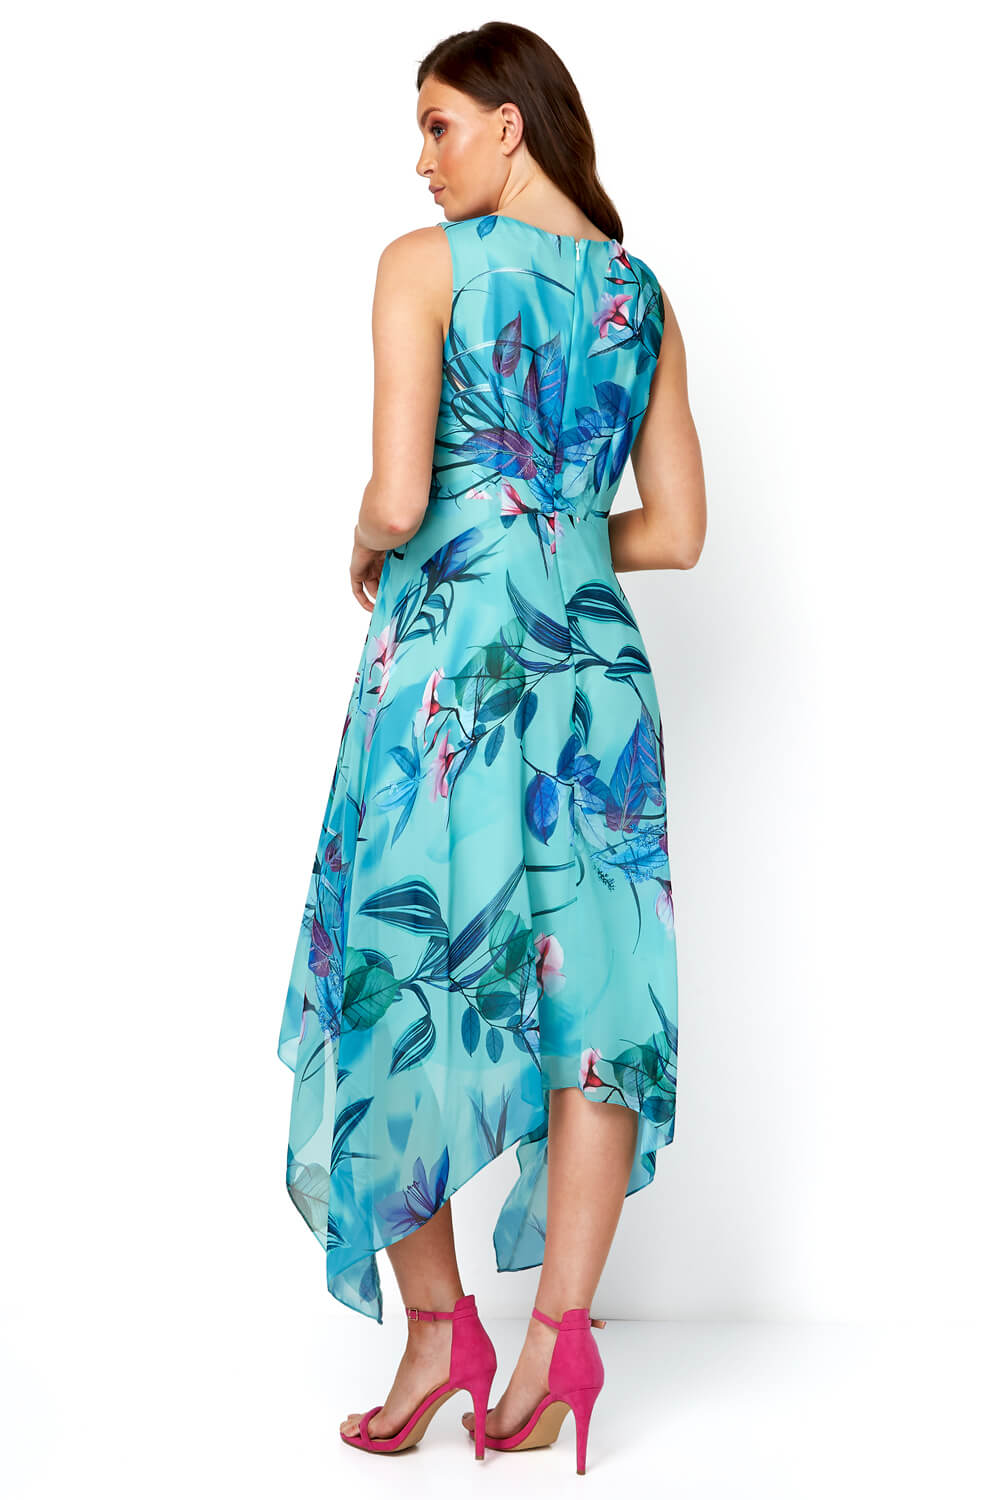 Turquoise Floral Chiffon Hanky Hem Midi Dress, Image 2 of 4